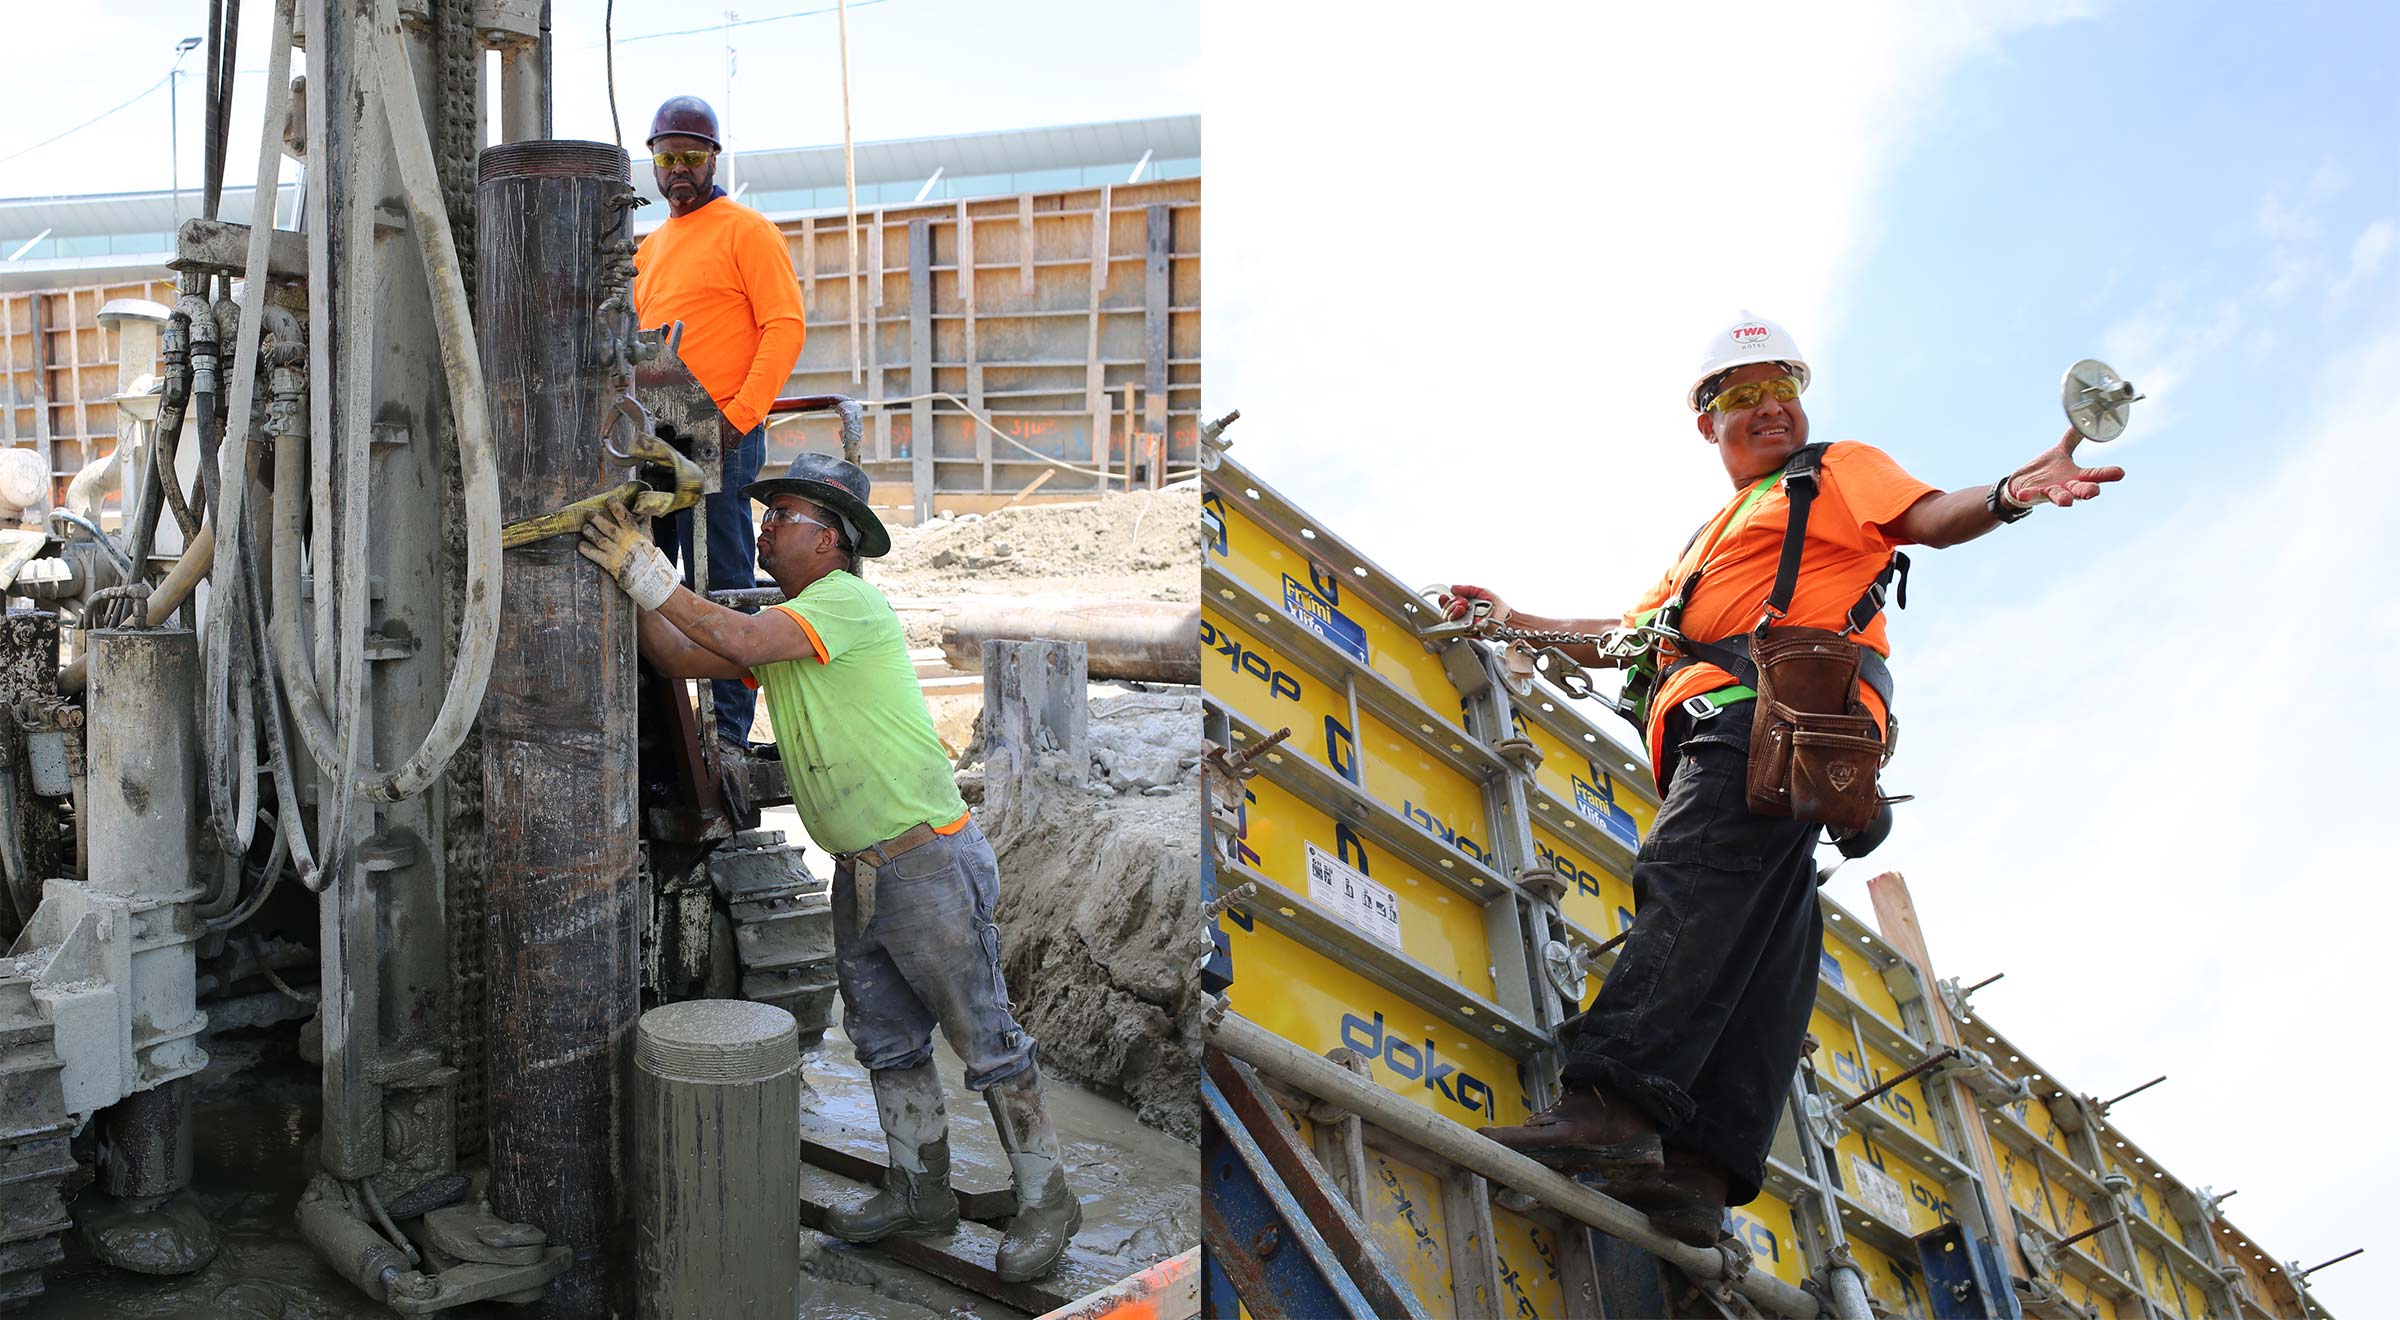 TWA Hotel Construction Team